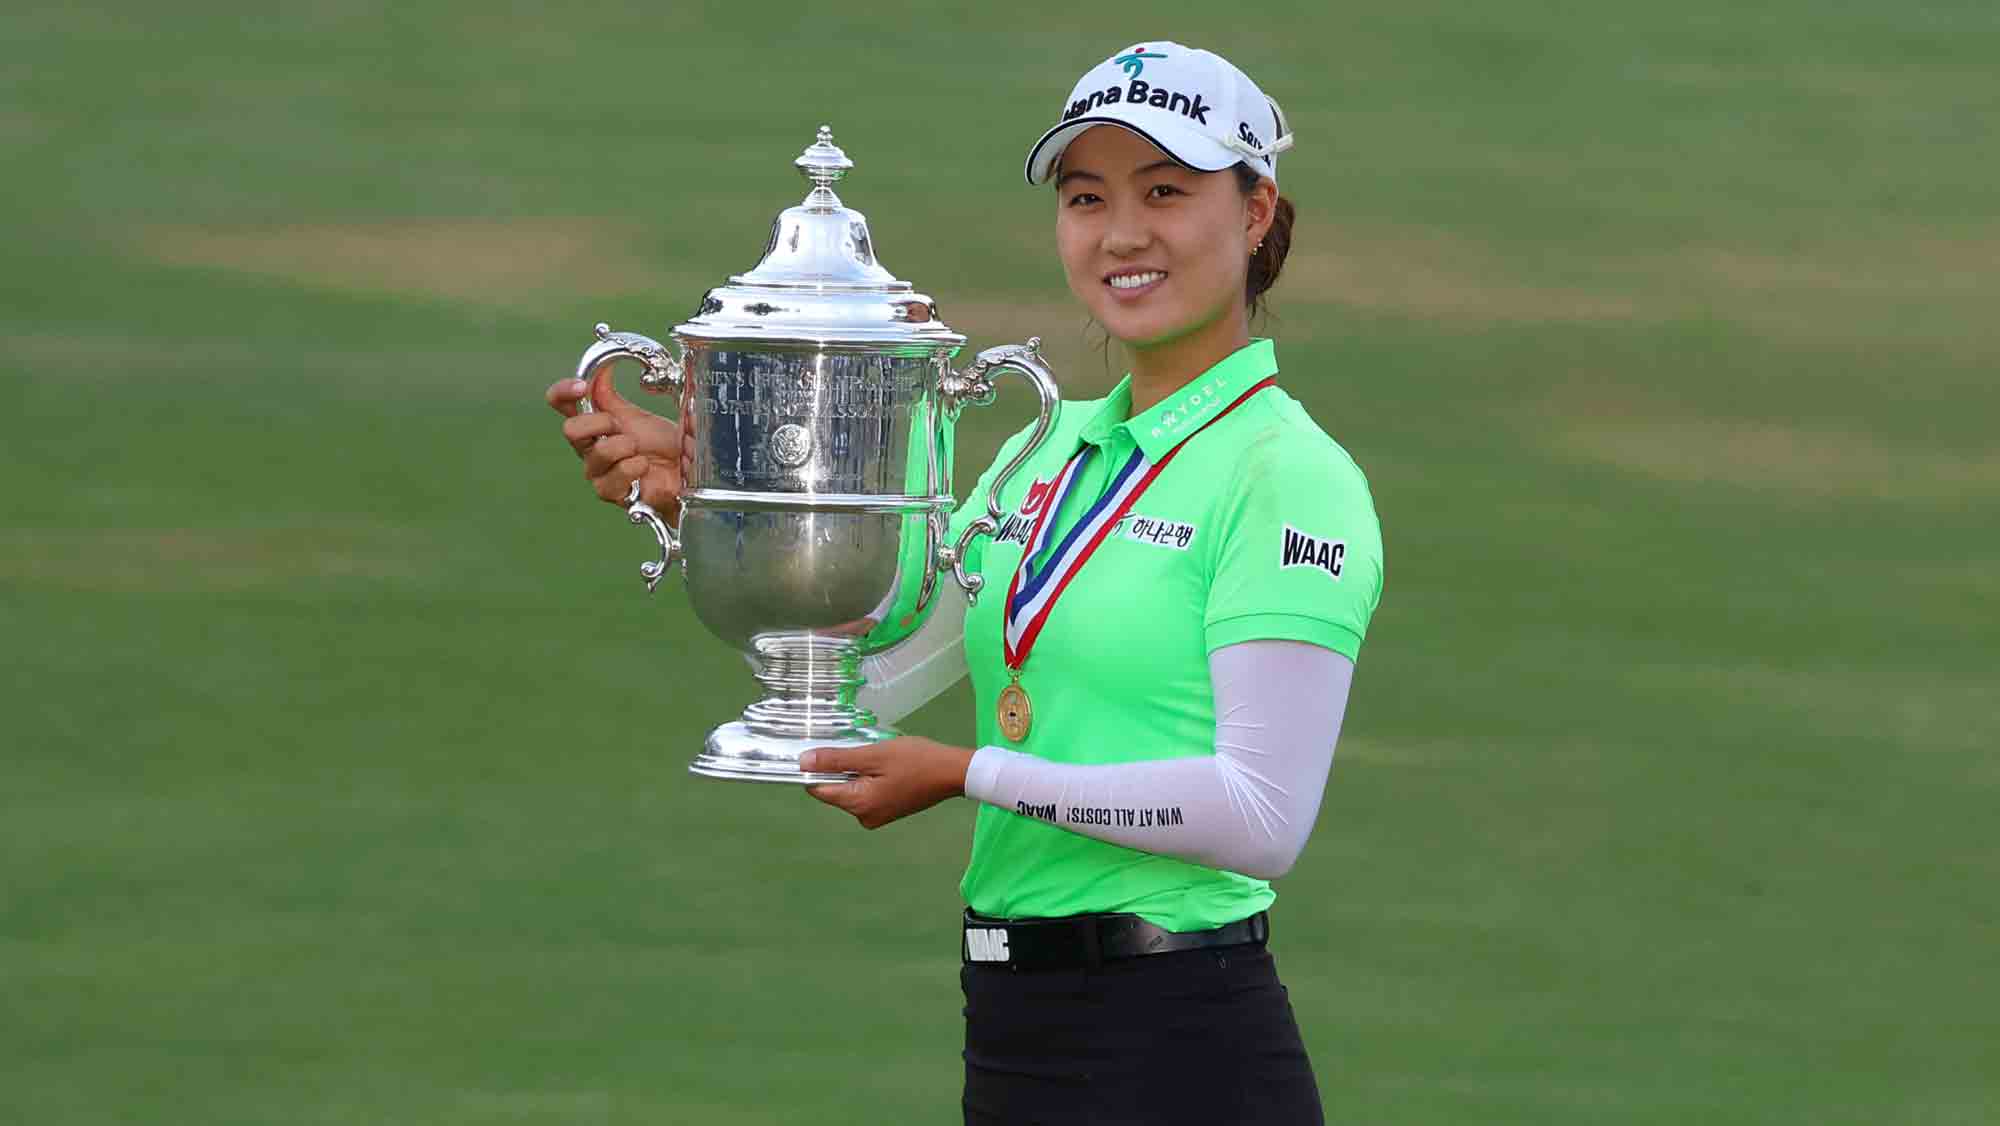 Awesome Aussie Lee wins U.S. Women's Open, record 1.8M LPGA